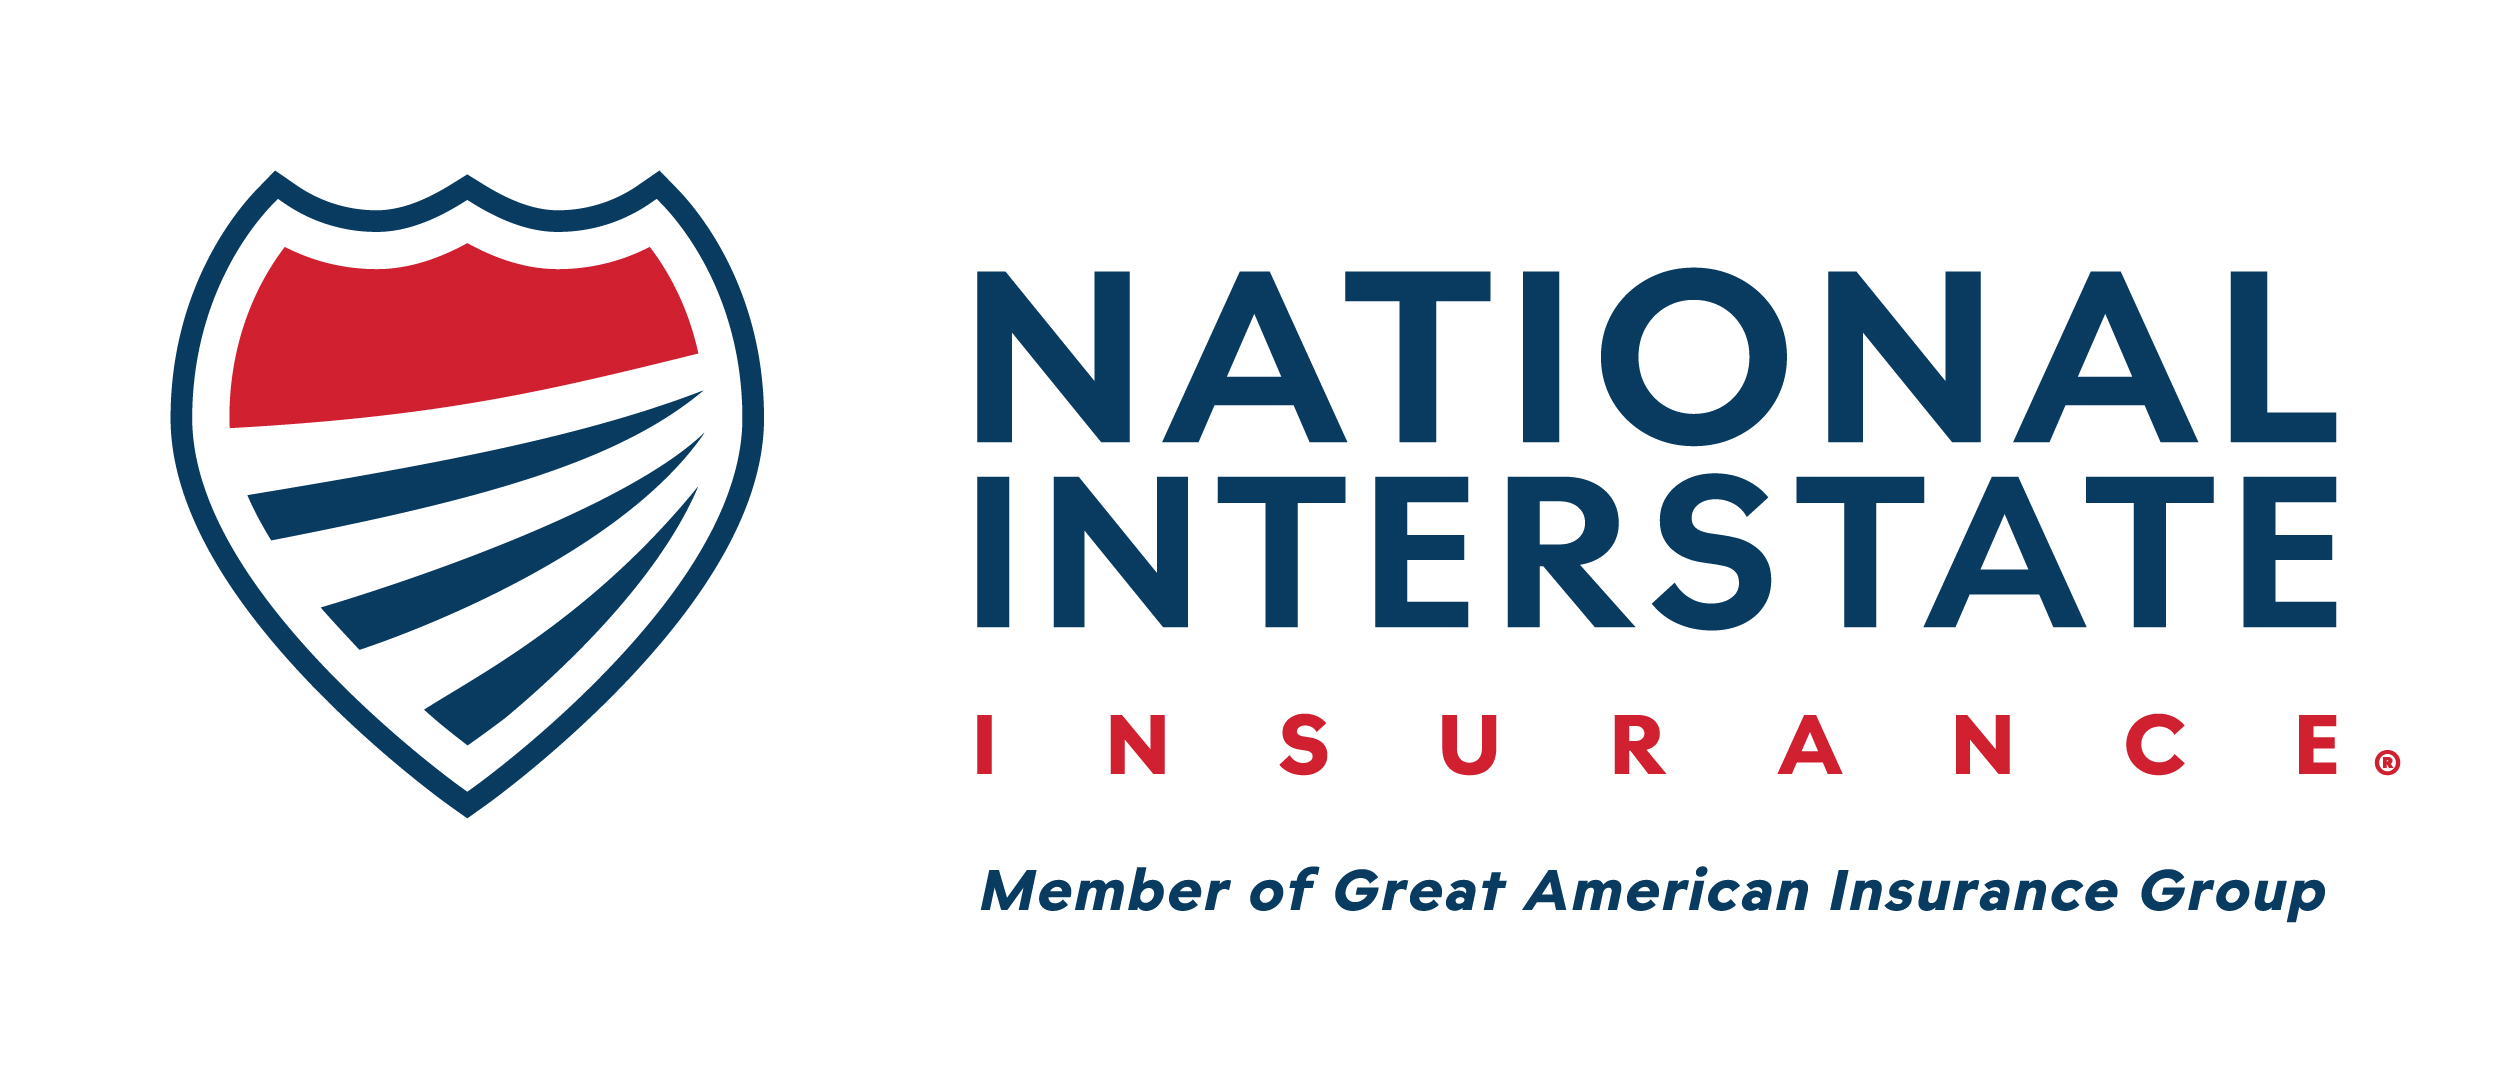 National Interstate Insurance Company Company Logo